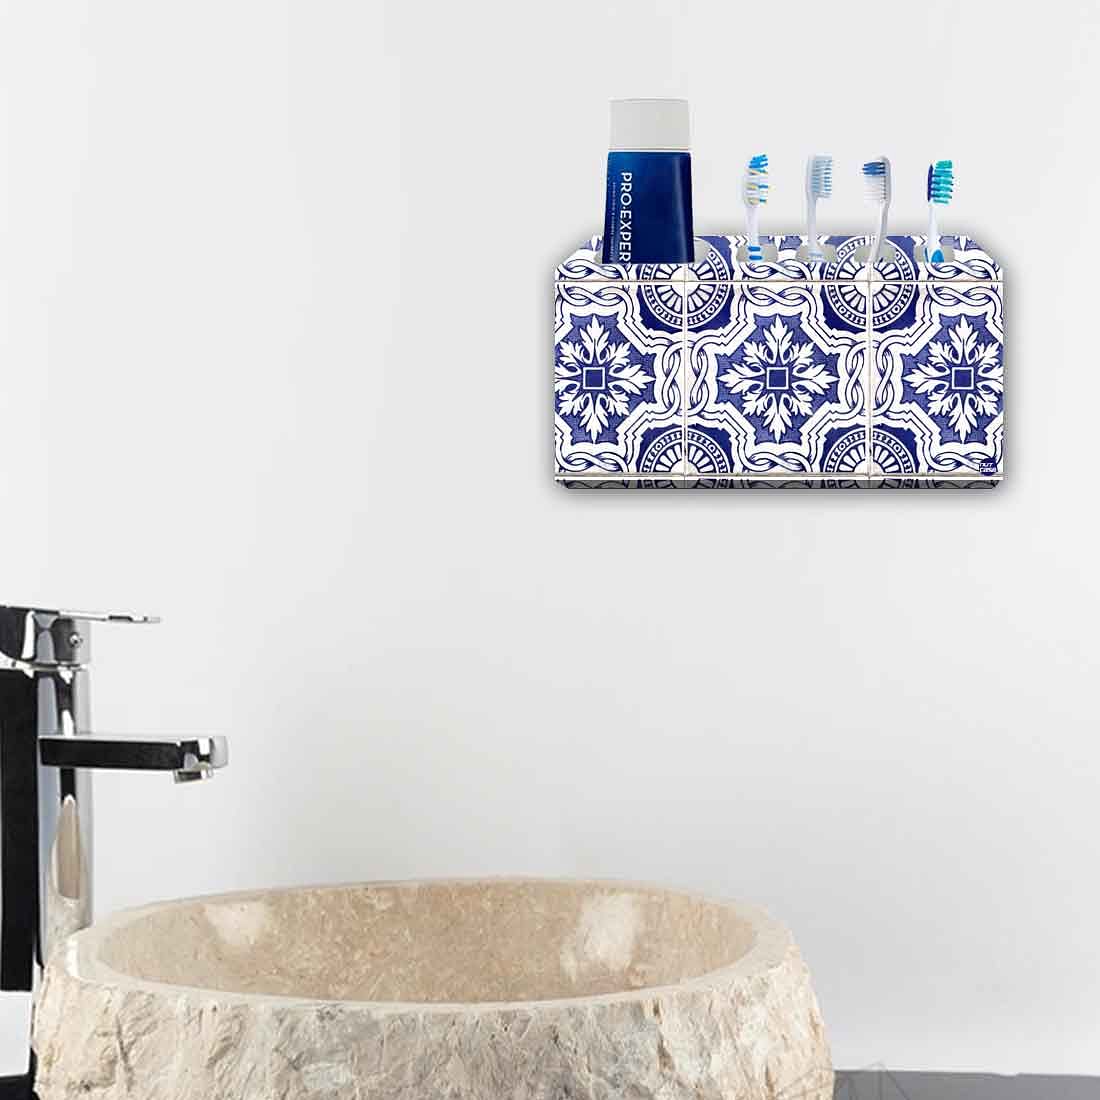 Toothbrush Holder Wall Mounted -Morocco Mosaic Nutcase